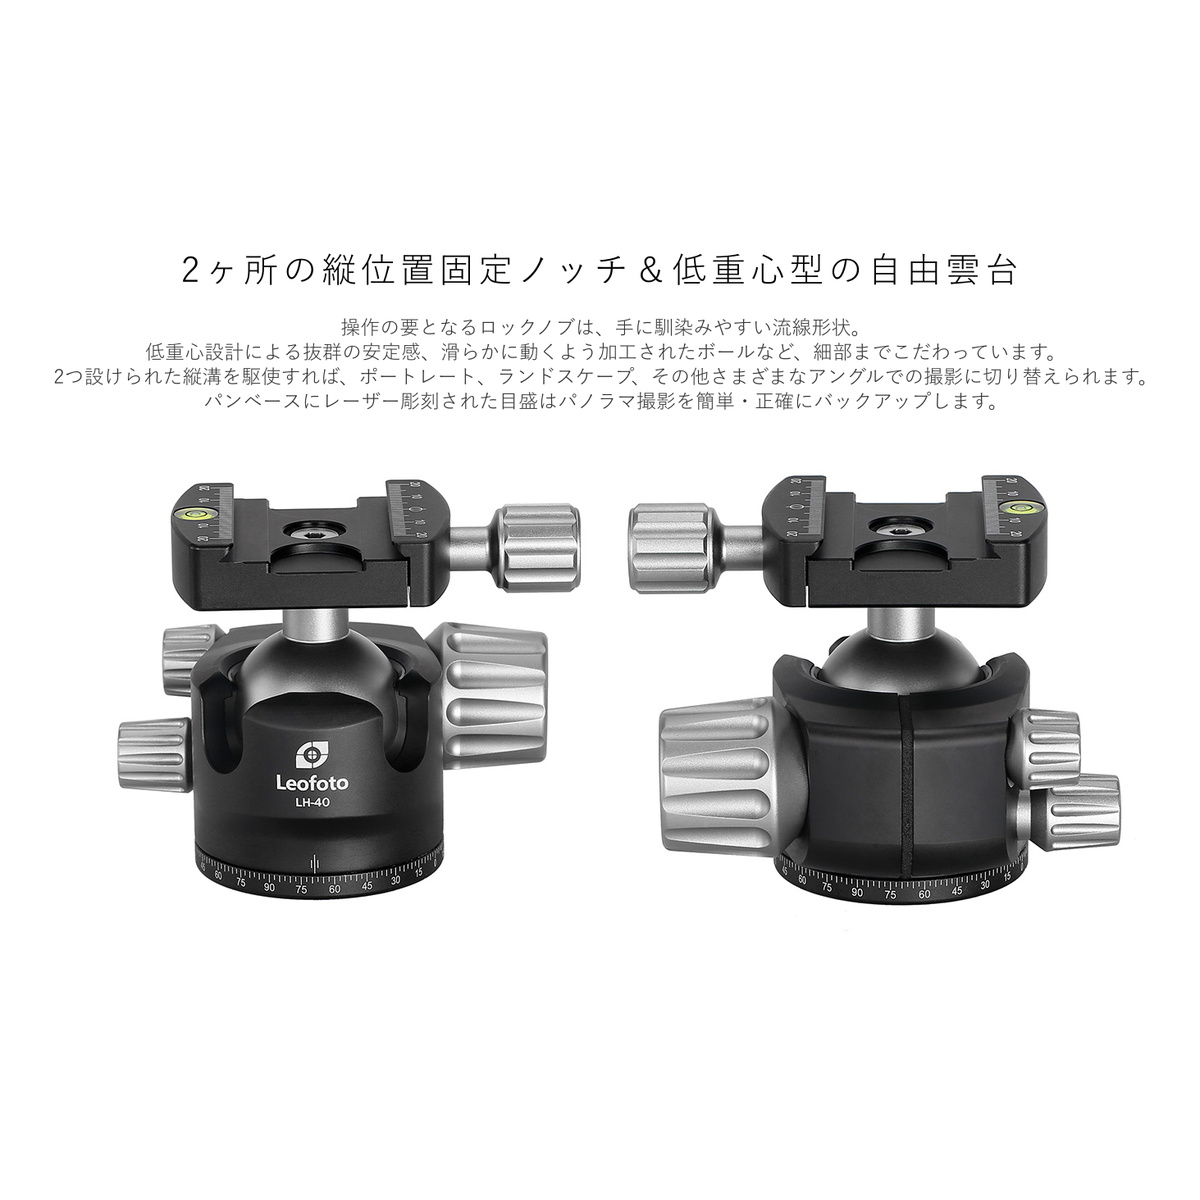 RRS Compatible with QR-70 Plate 6940828320031 CULLMANN LEOFOTO LH-40 40mm Low Profile Ball Head Arca 